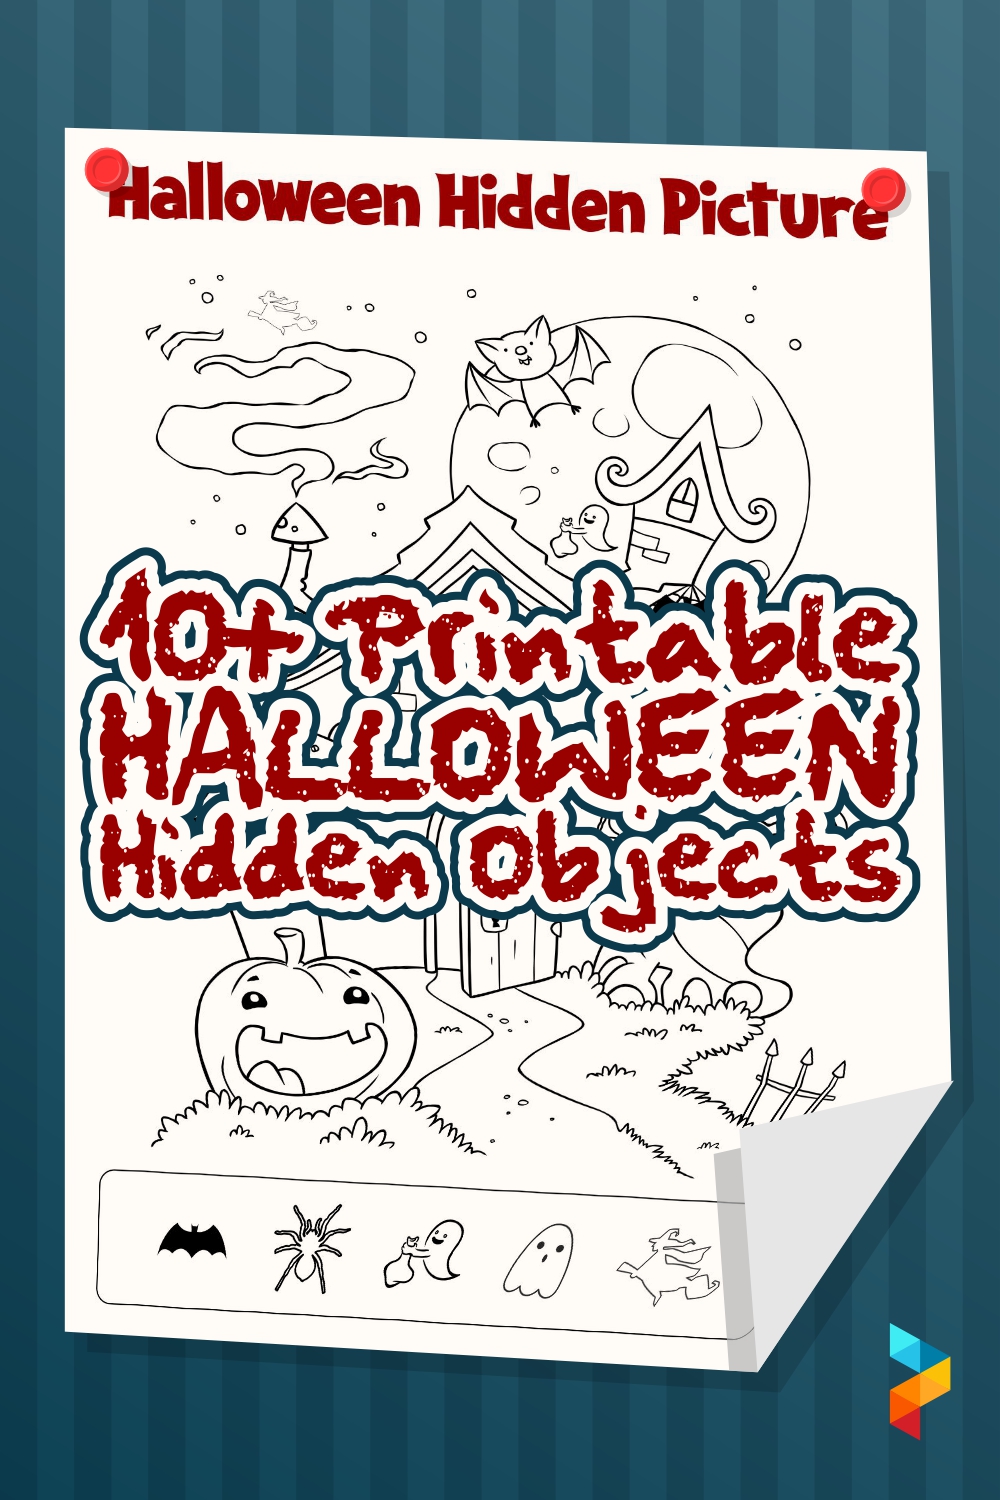 Printable Halloween Hidden Objects